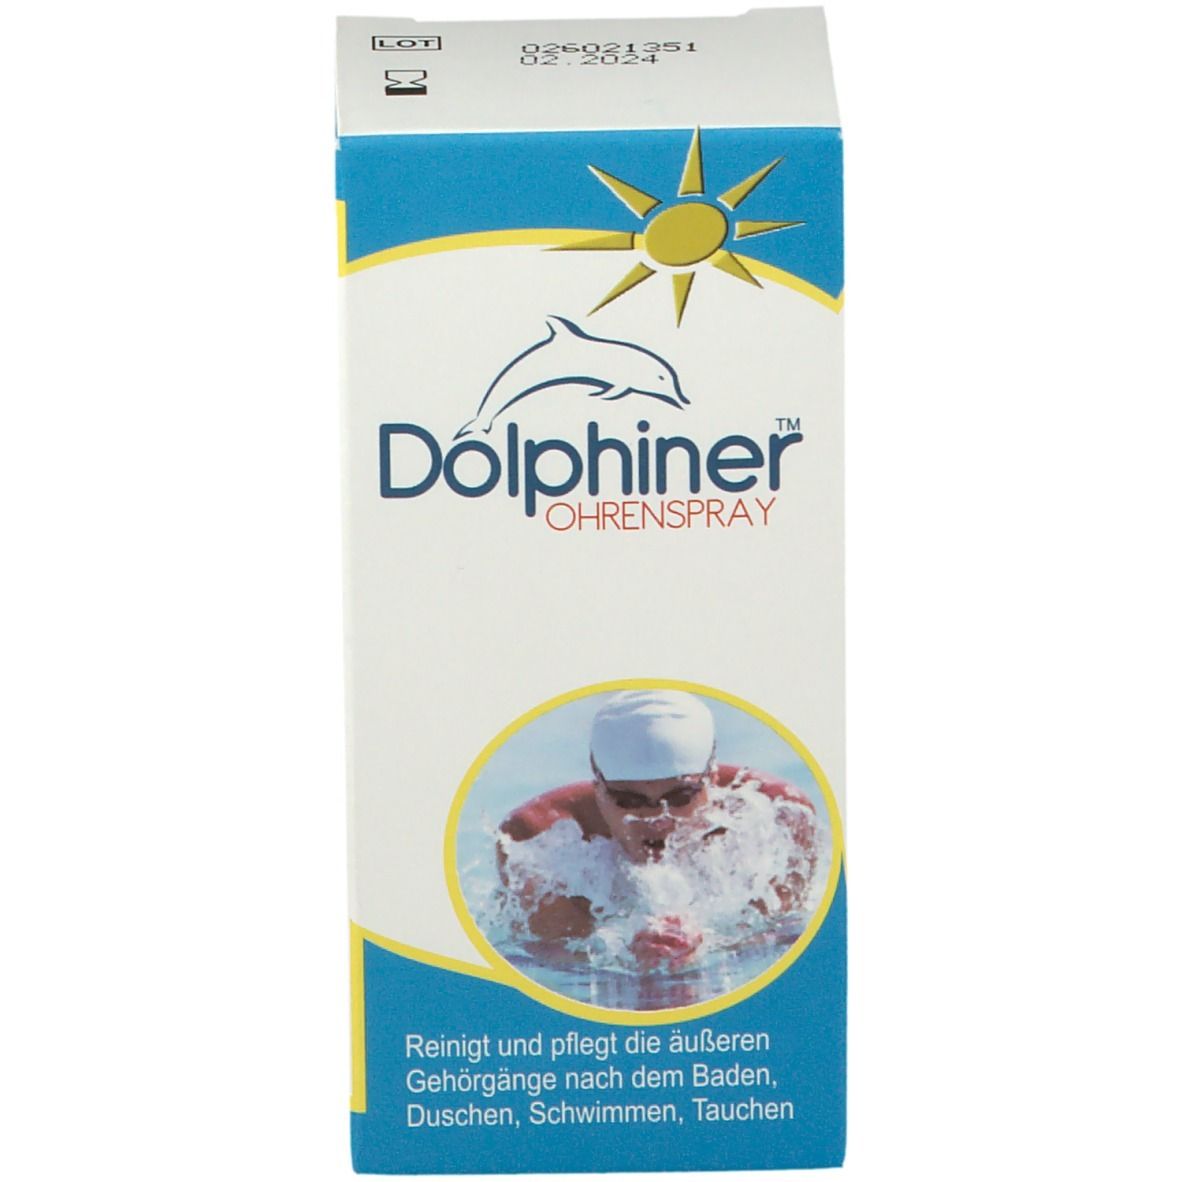 Dolphiner™ Ohrenspray